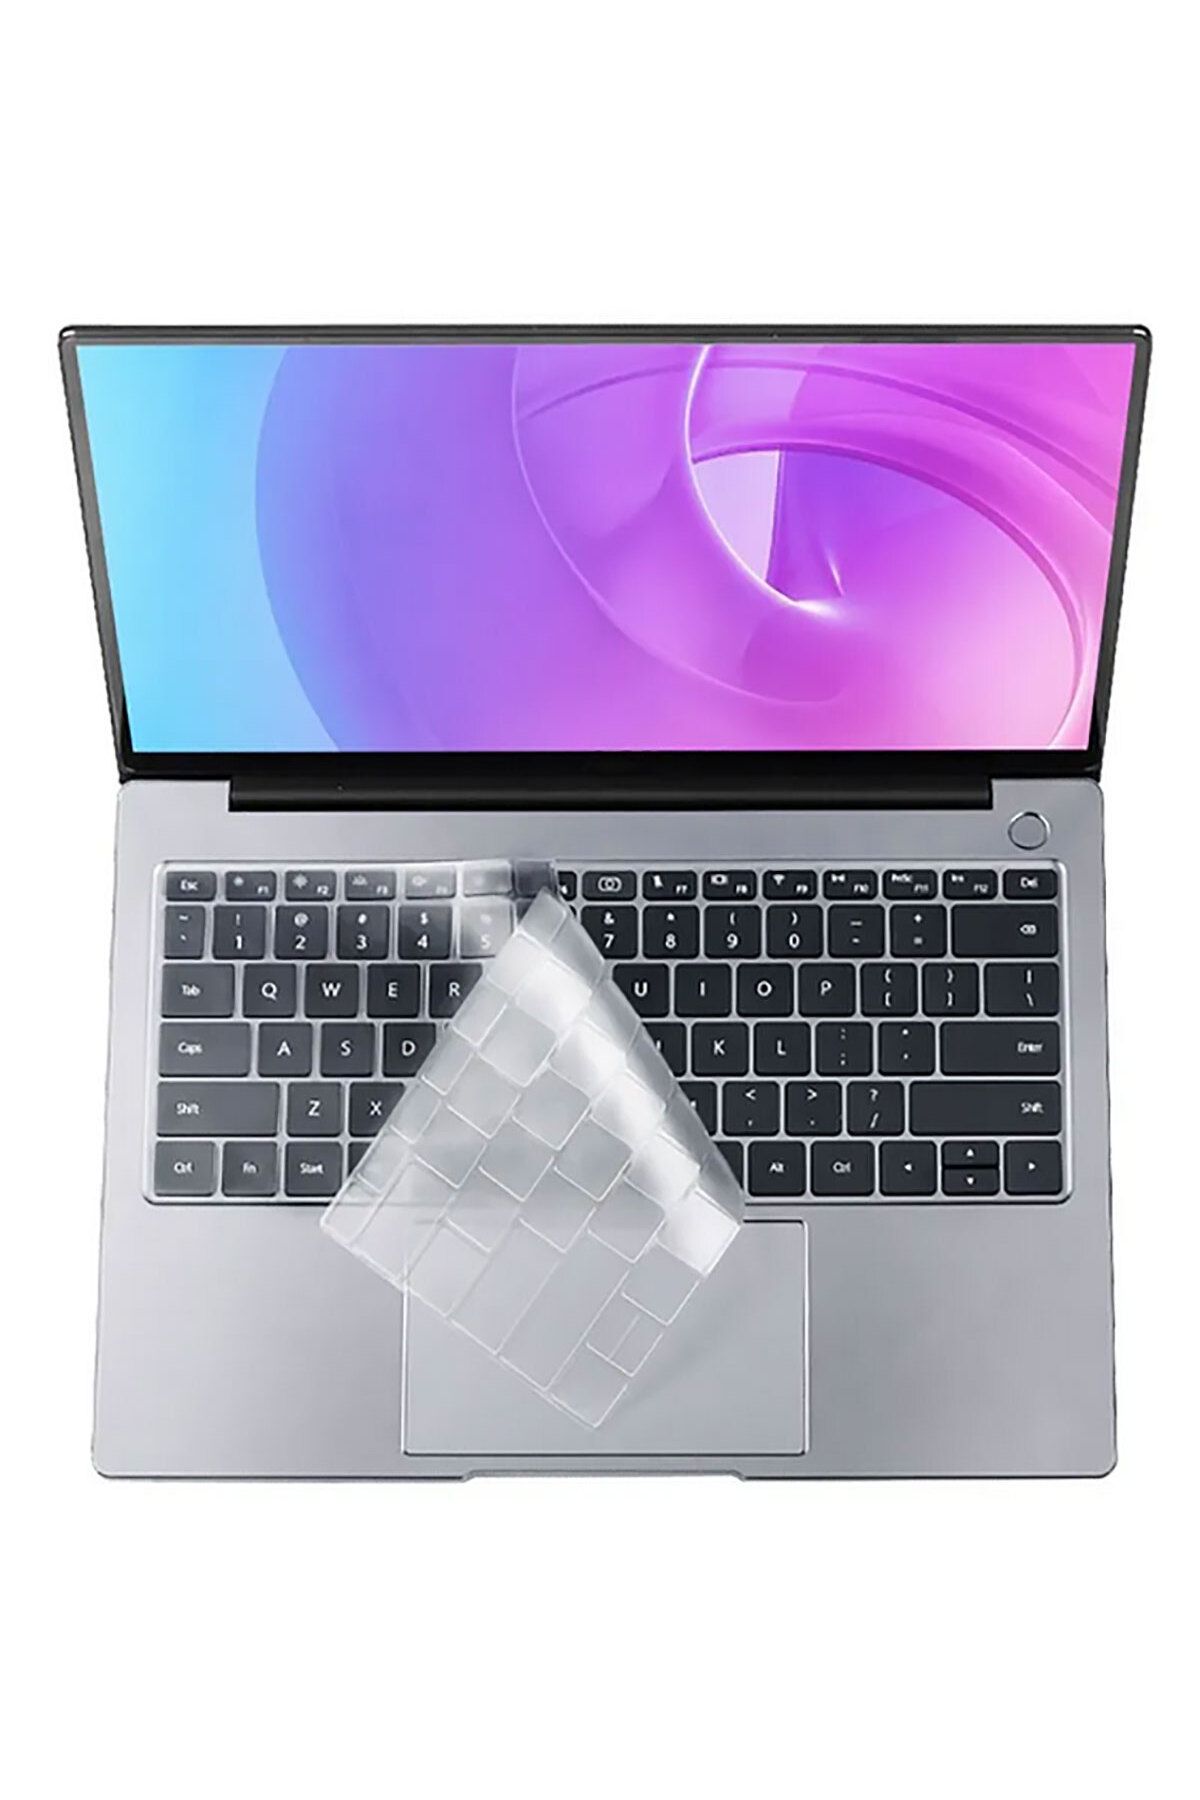 Rba aksesuar Apple Macbook Air 11' A1370-A1465  Klavye Koruyucu Transparan Buzlu Silikon Ped